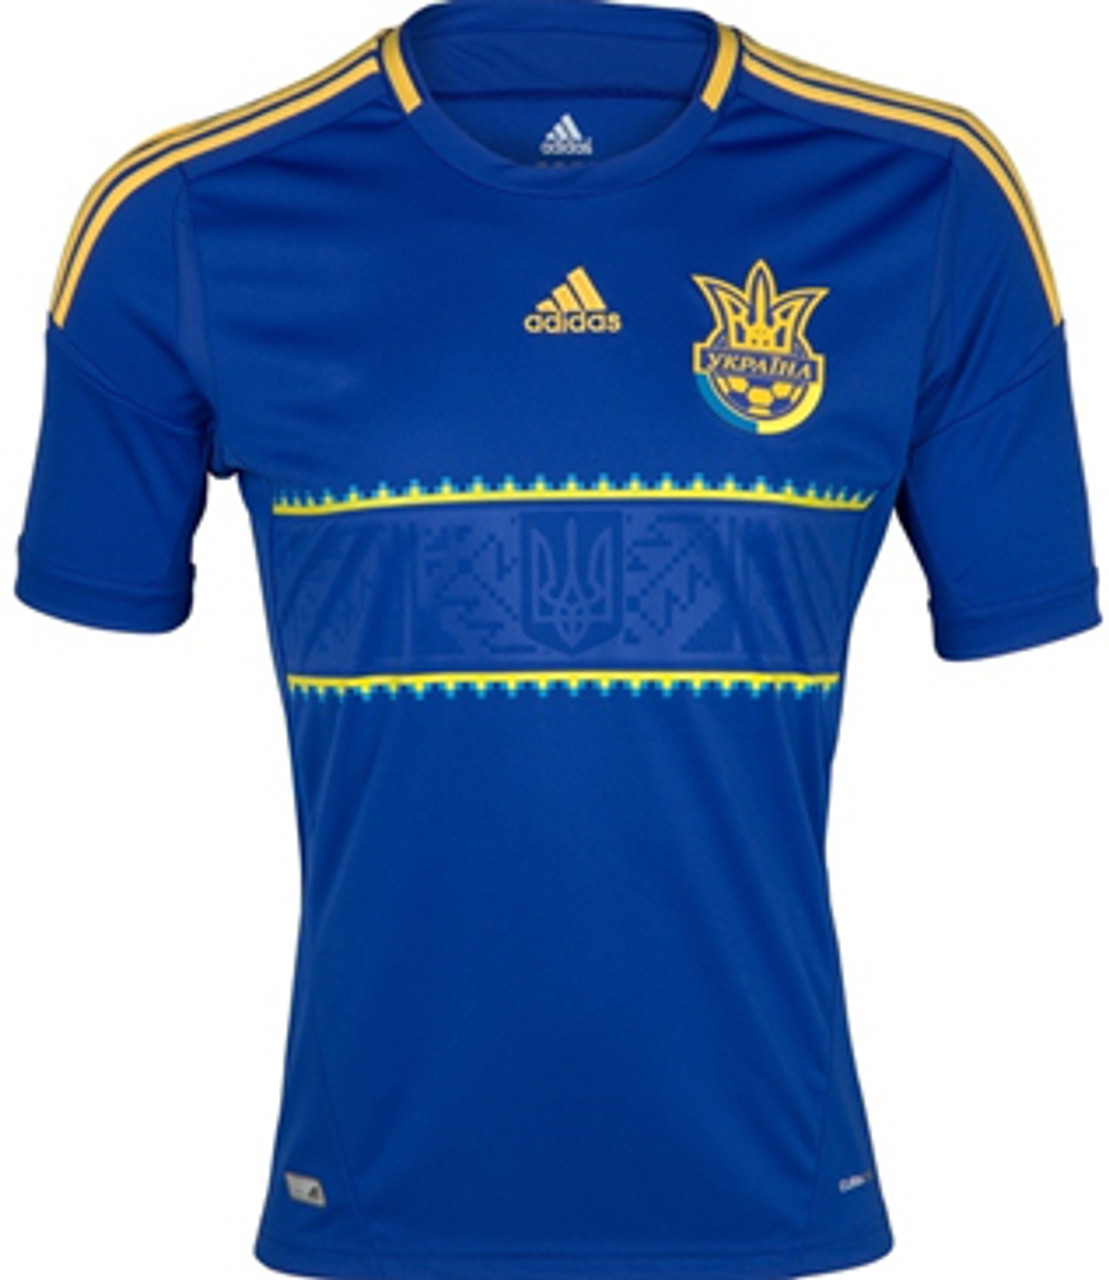 ukraine soccer jersey